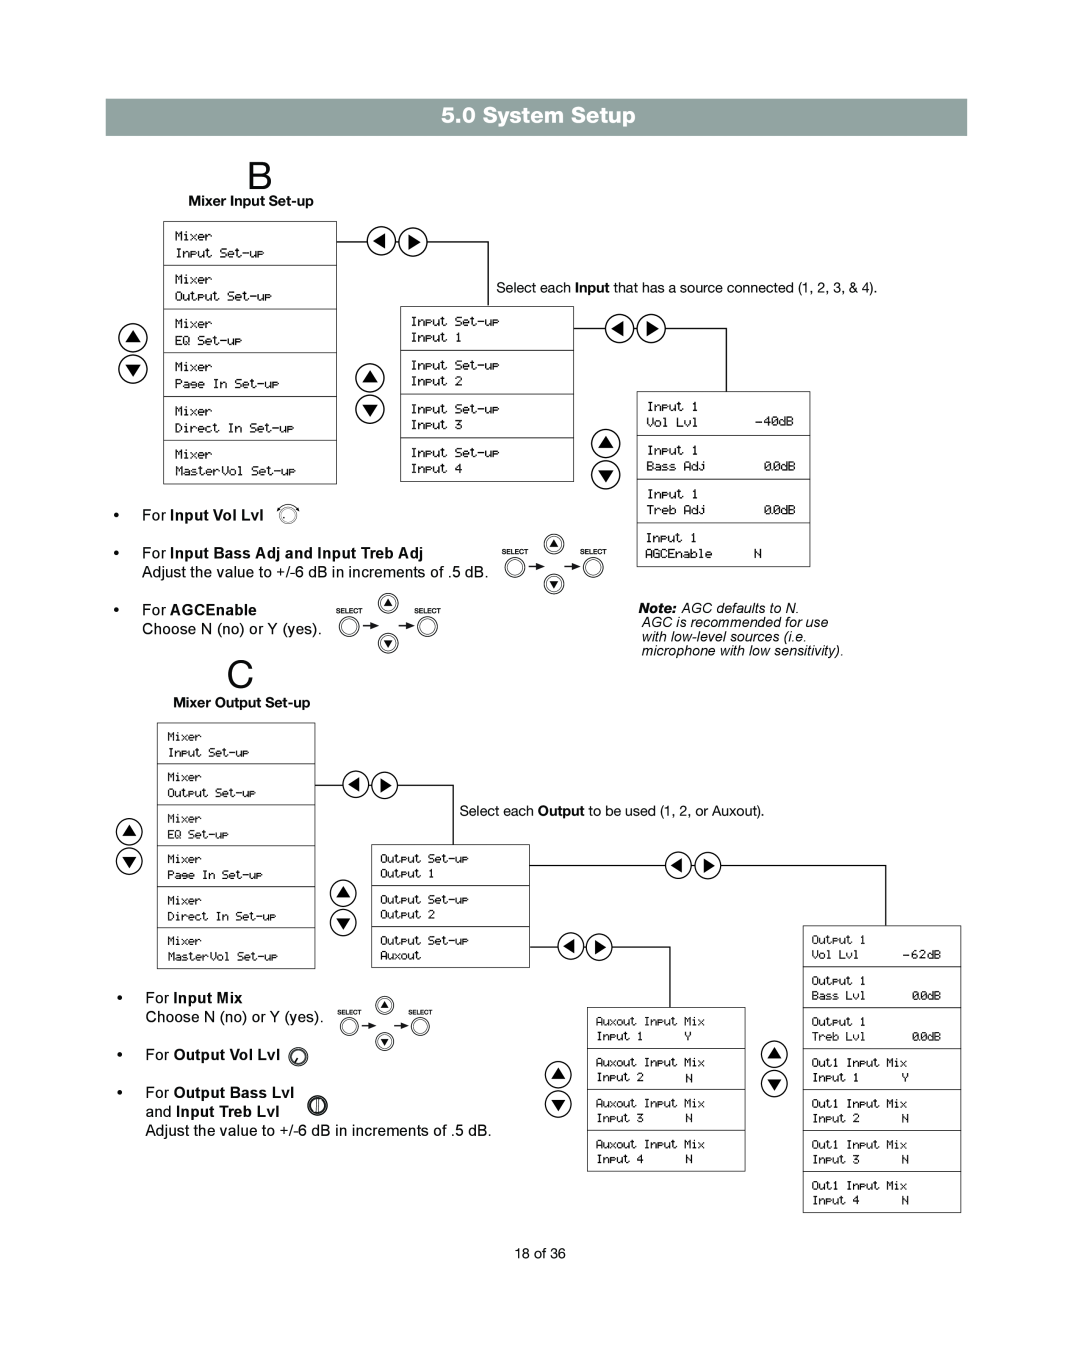 Bose DXA2120 manual System Setup, For Input Vol Lvl, For Input Bass Adj and Input Treb Adj, For AGCEnable, For Input Mix 